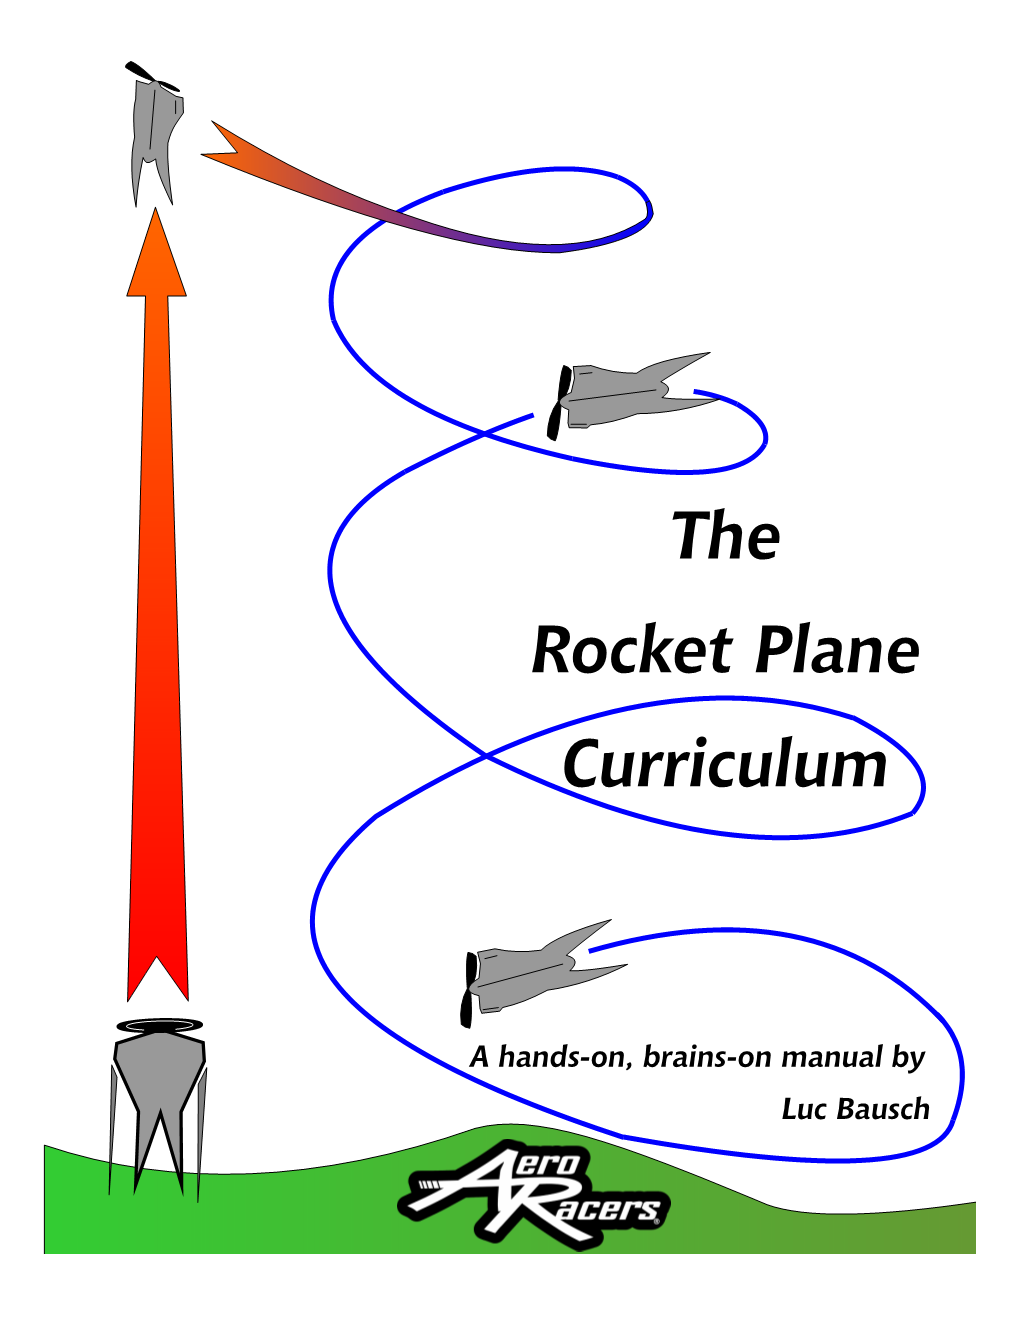 The Rocket Plane Curriculum